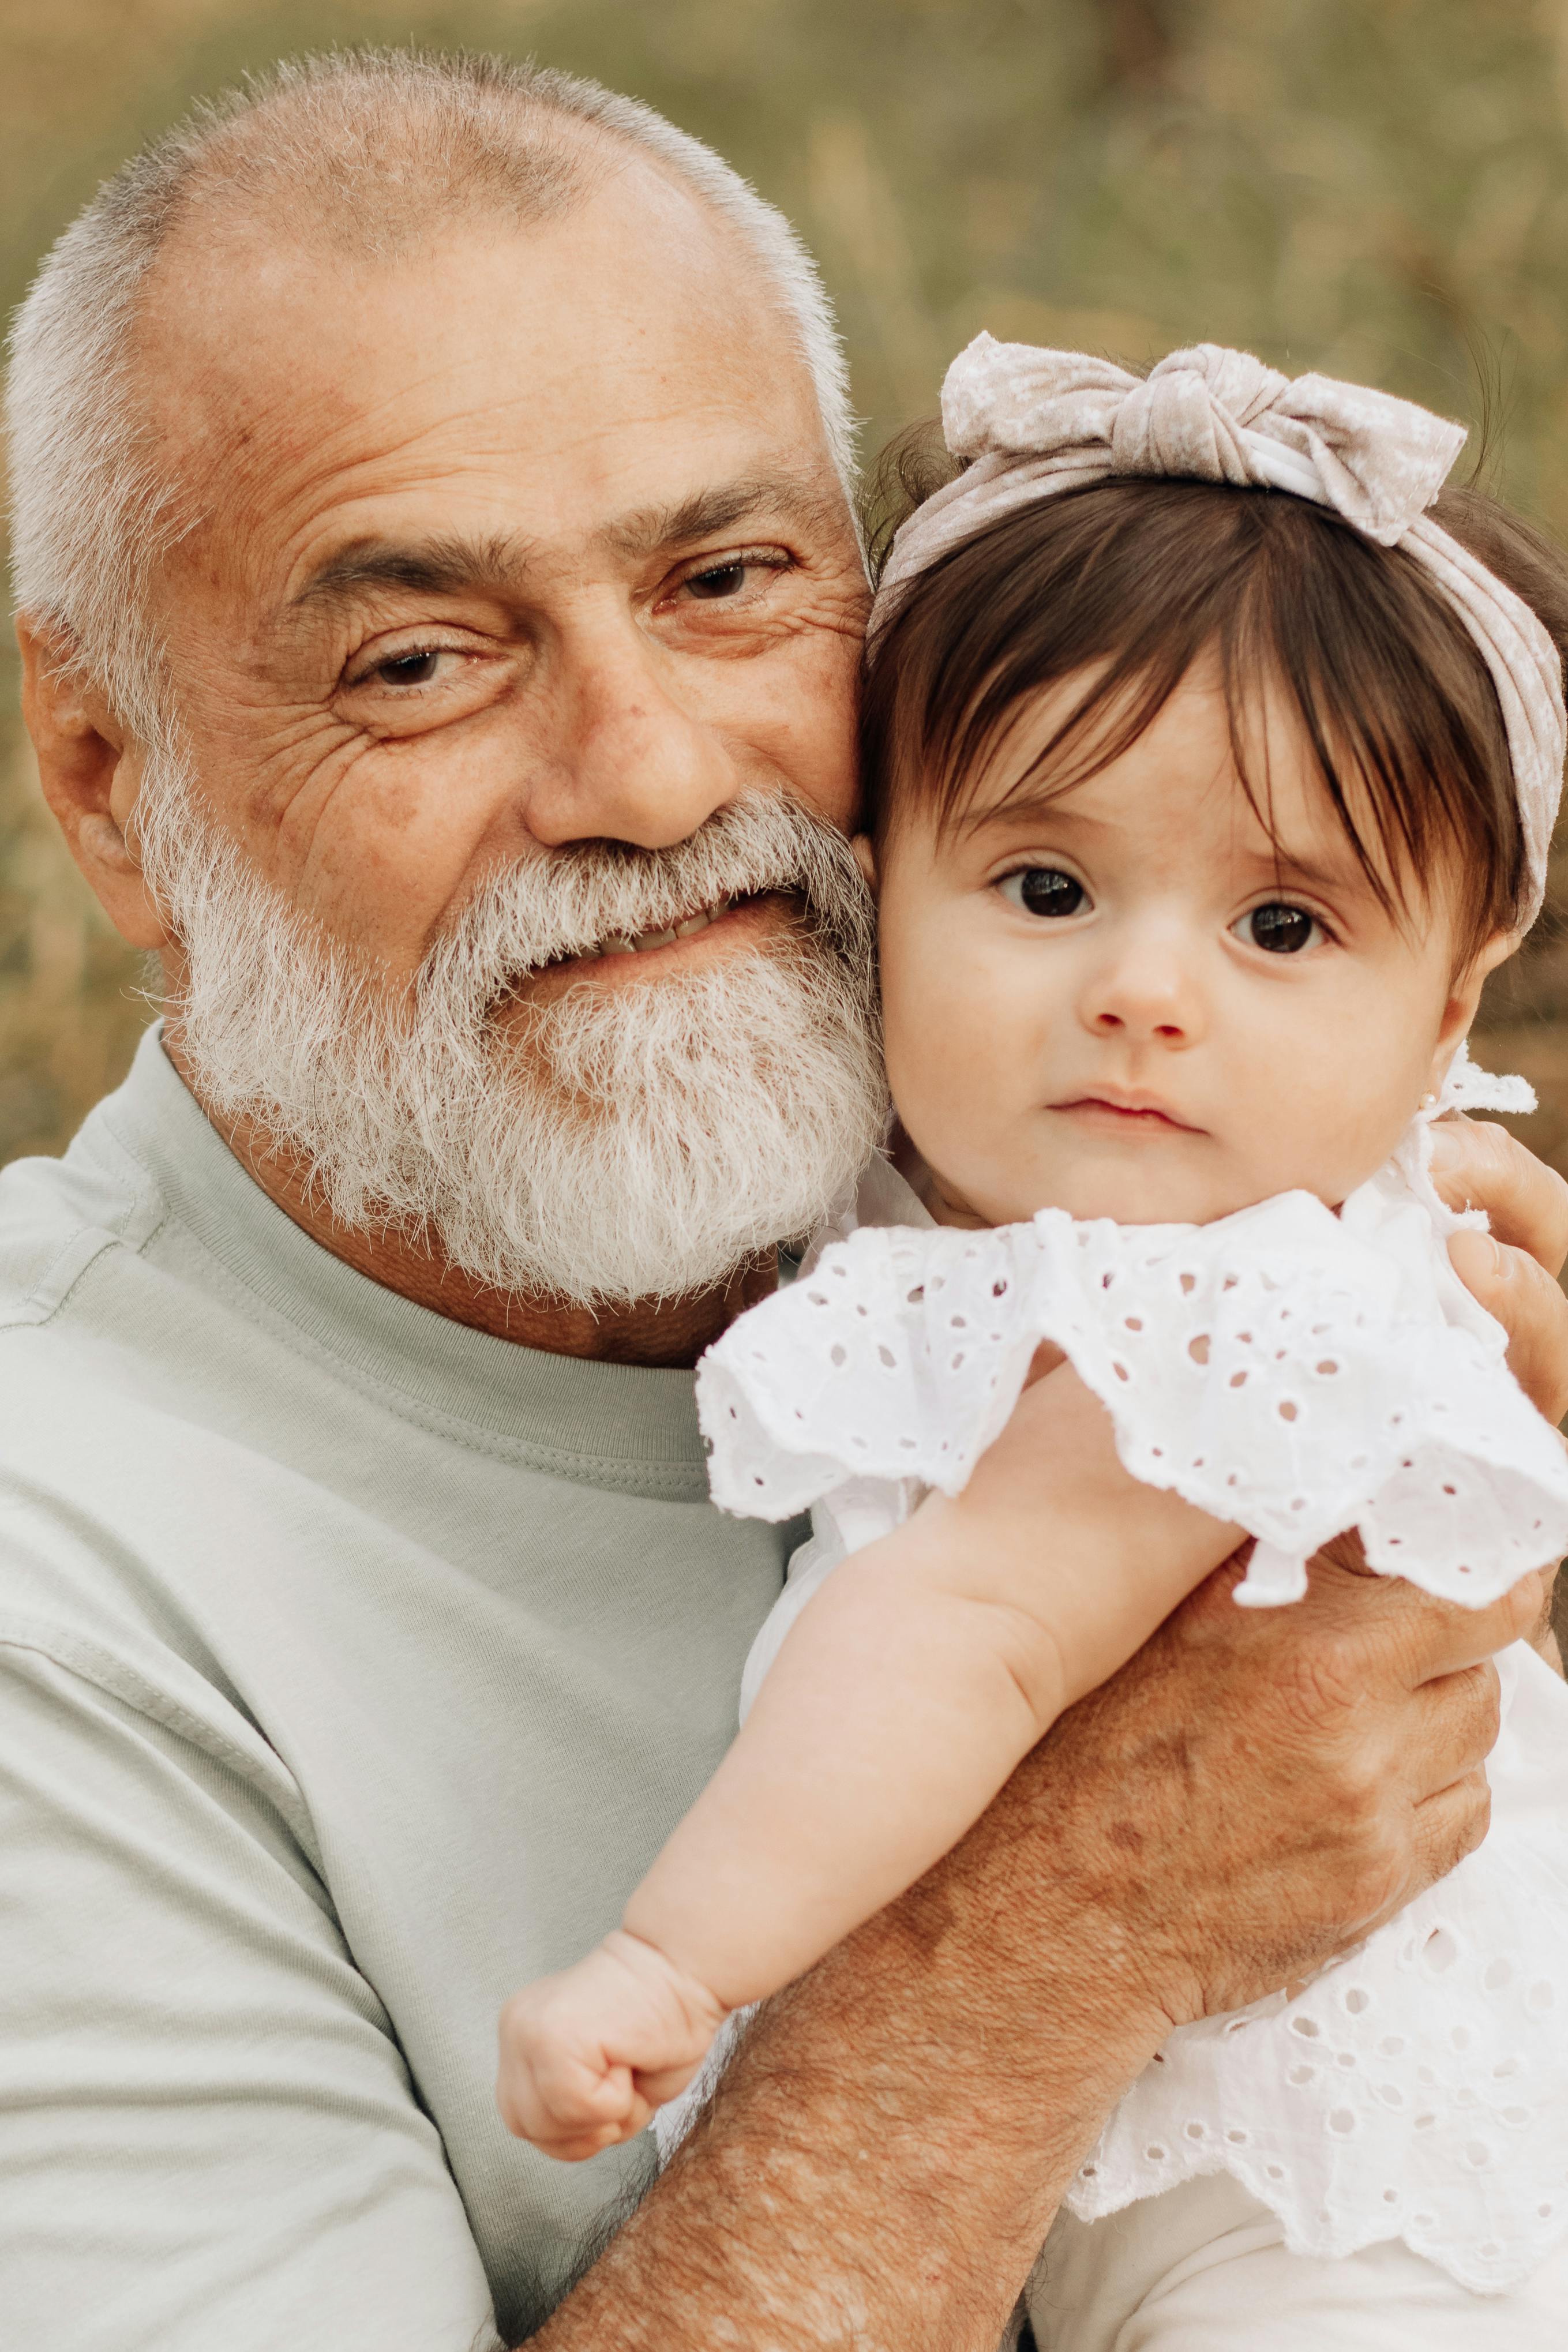 An older man holding a girl child | Source: Pexels